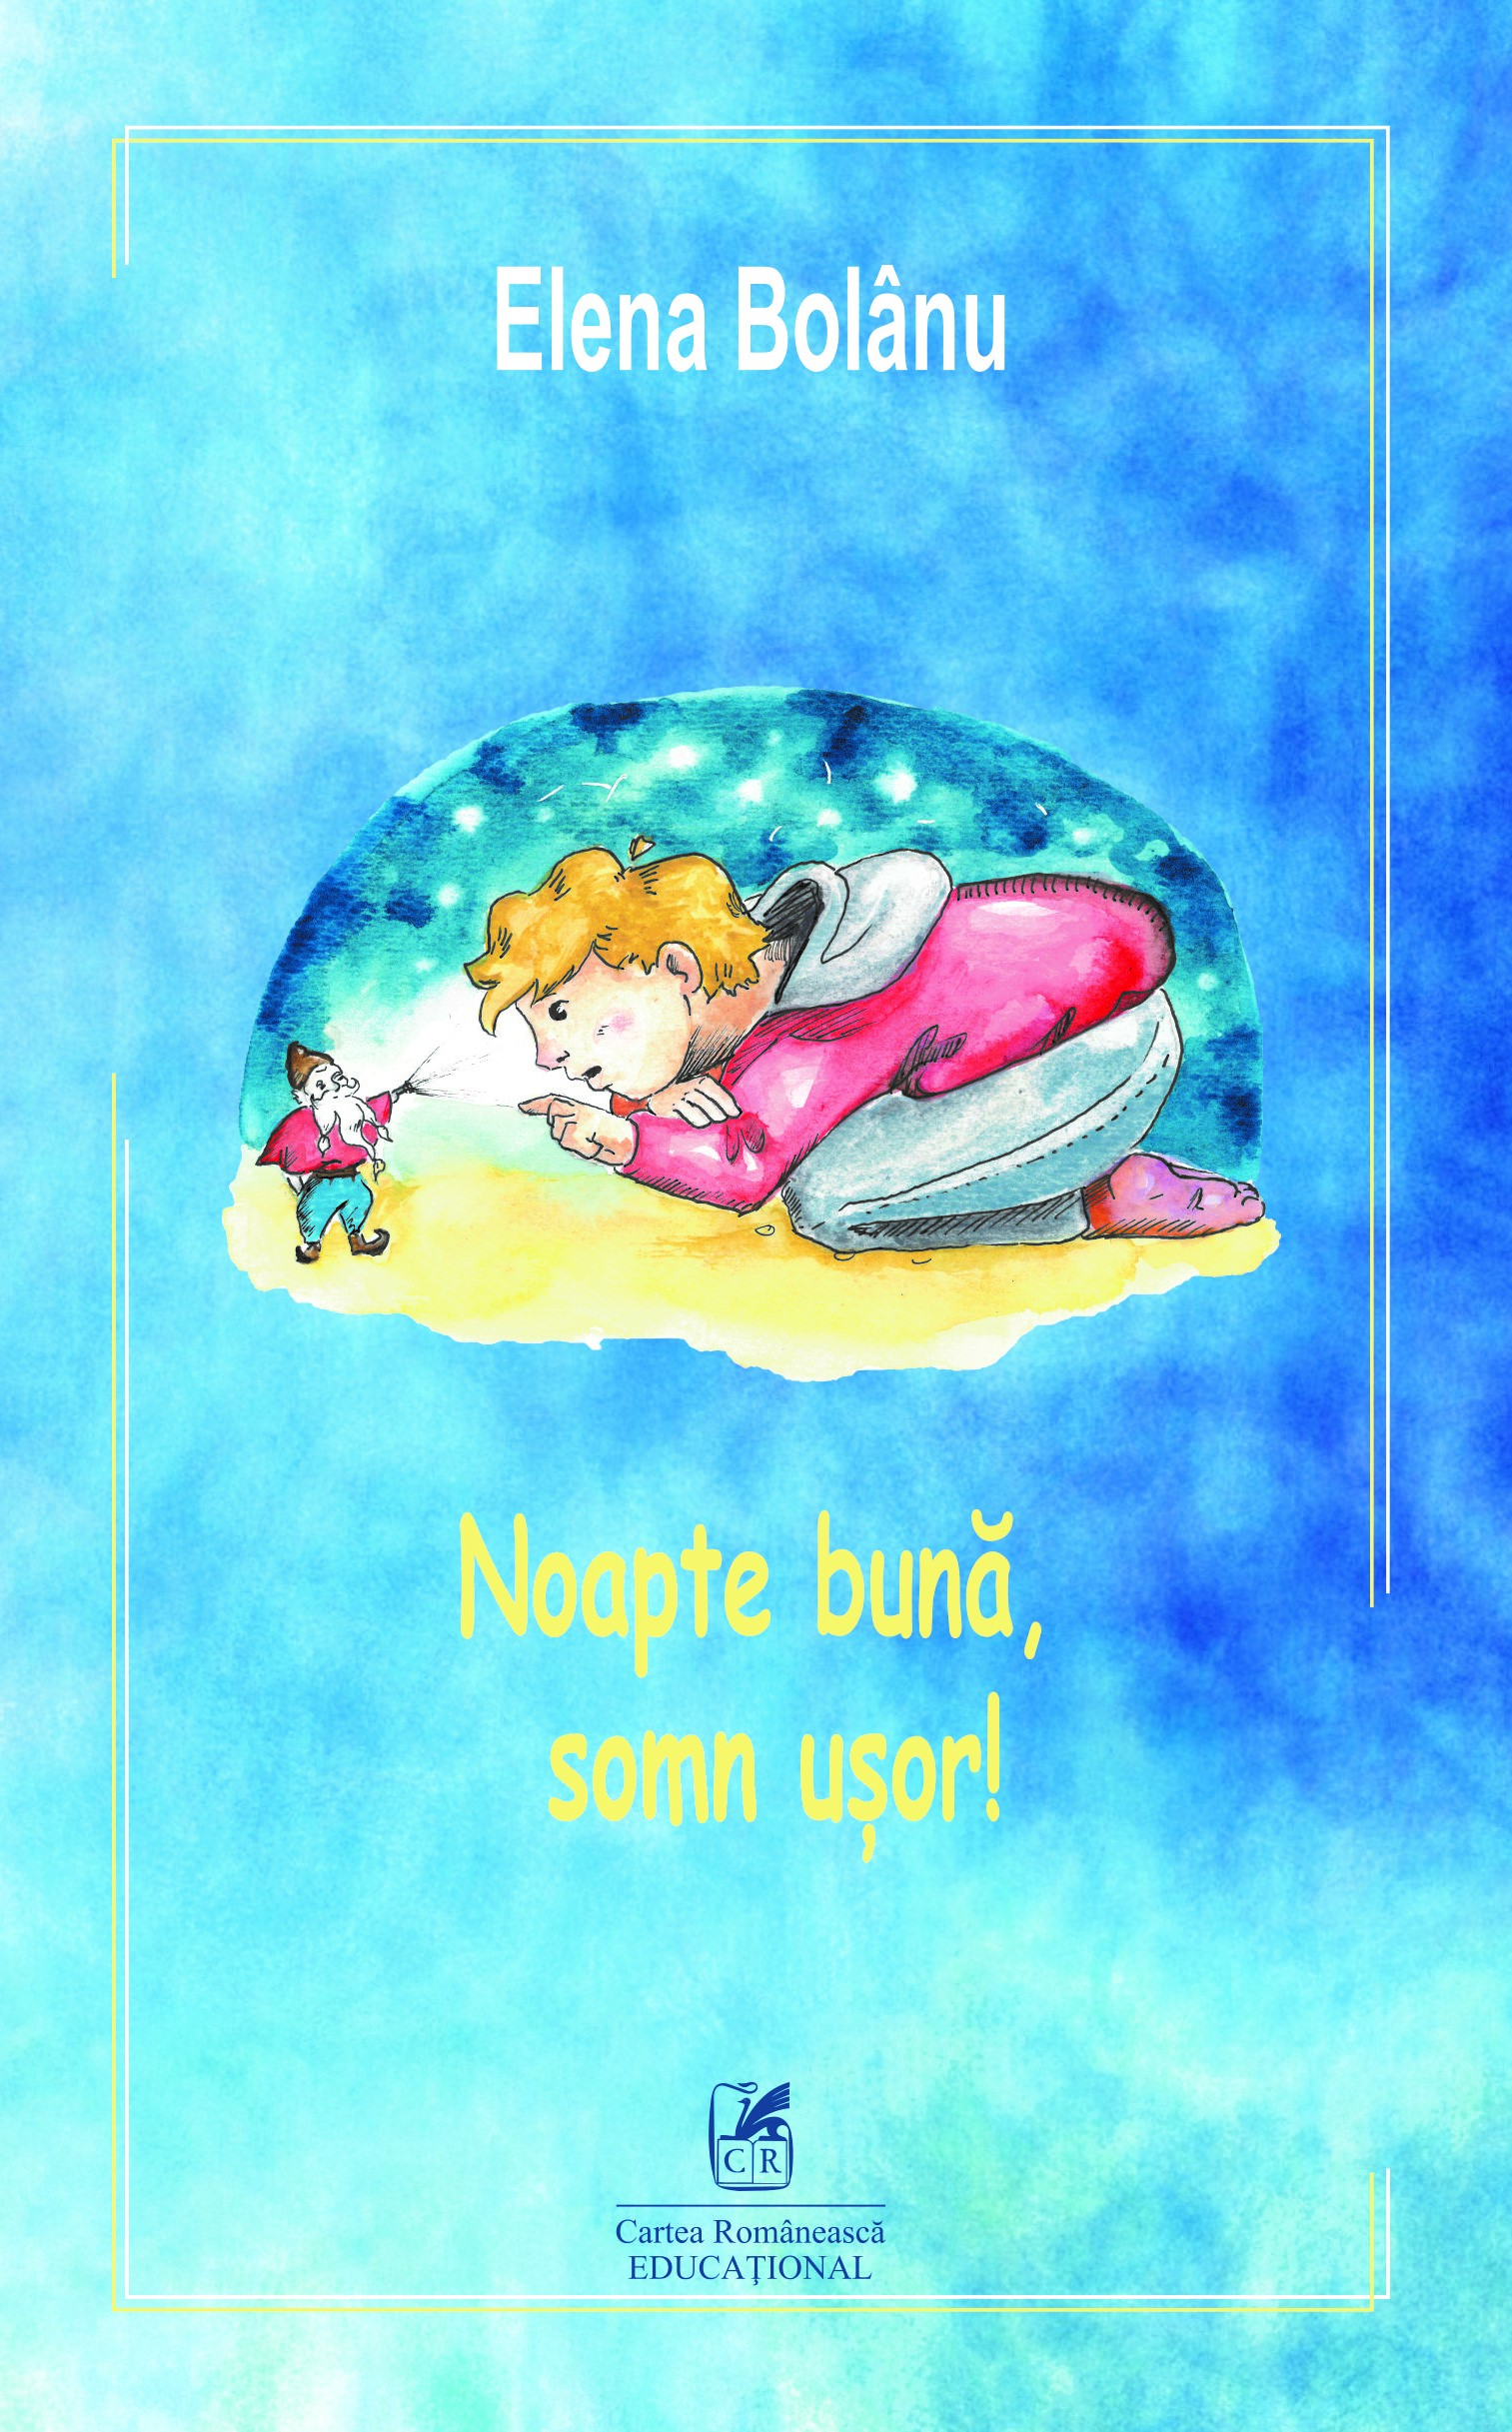 PDF Noapte buna, somn usor | Elena Bolanu Cartea Romaneasca educational Carte